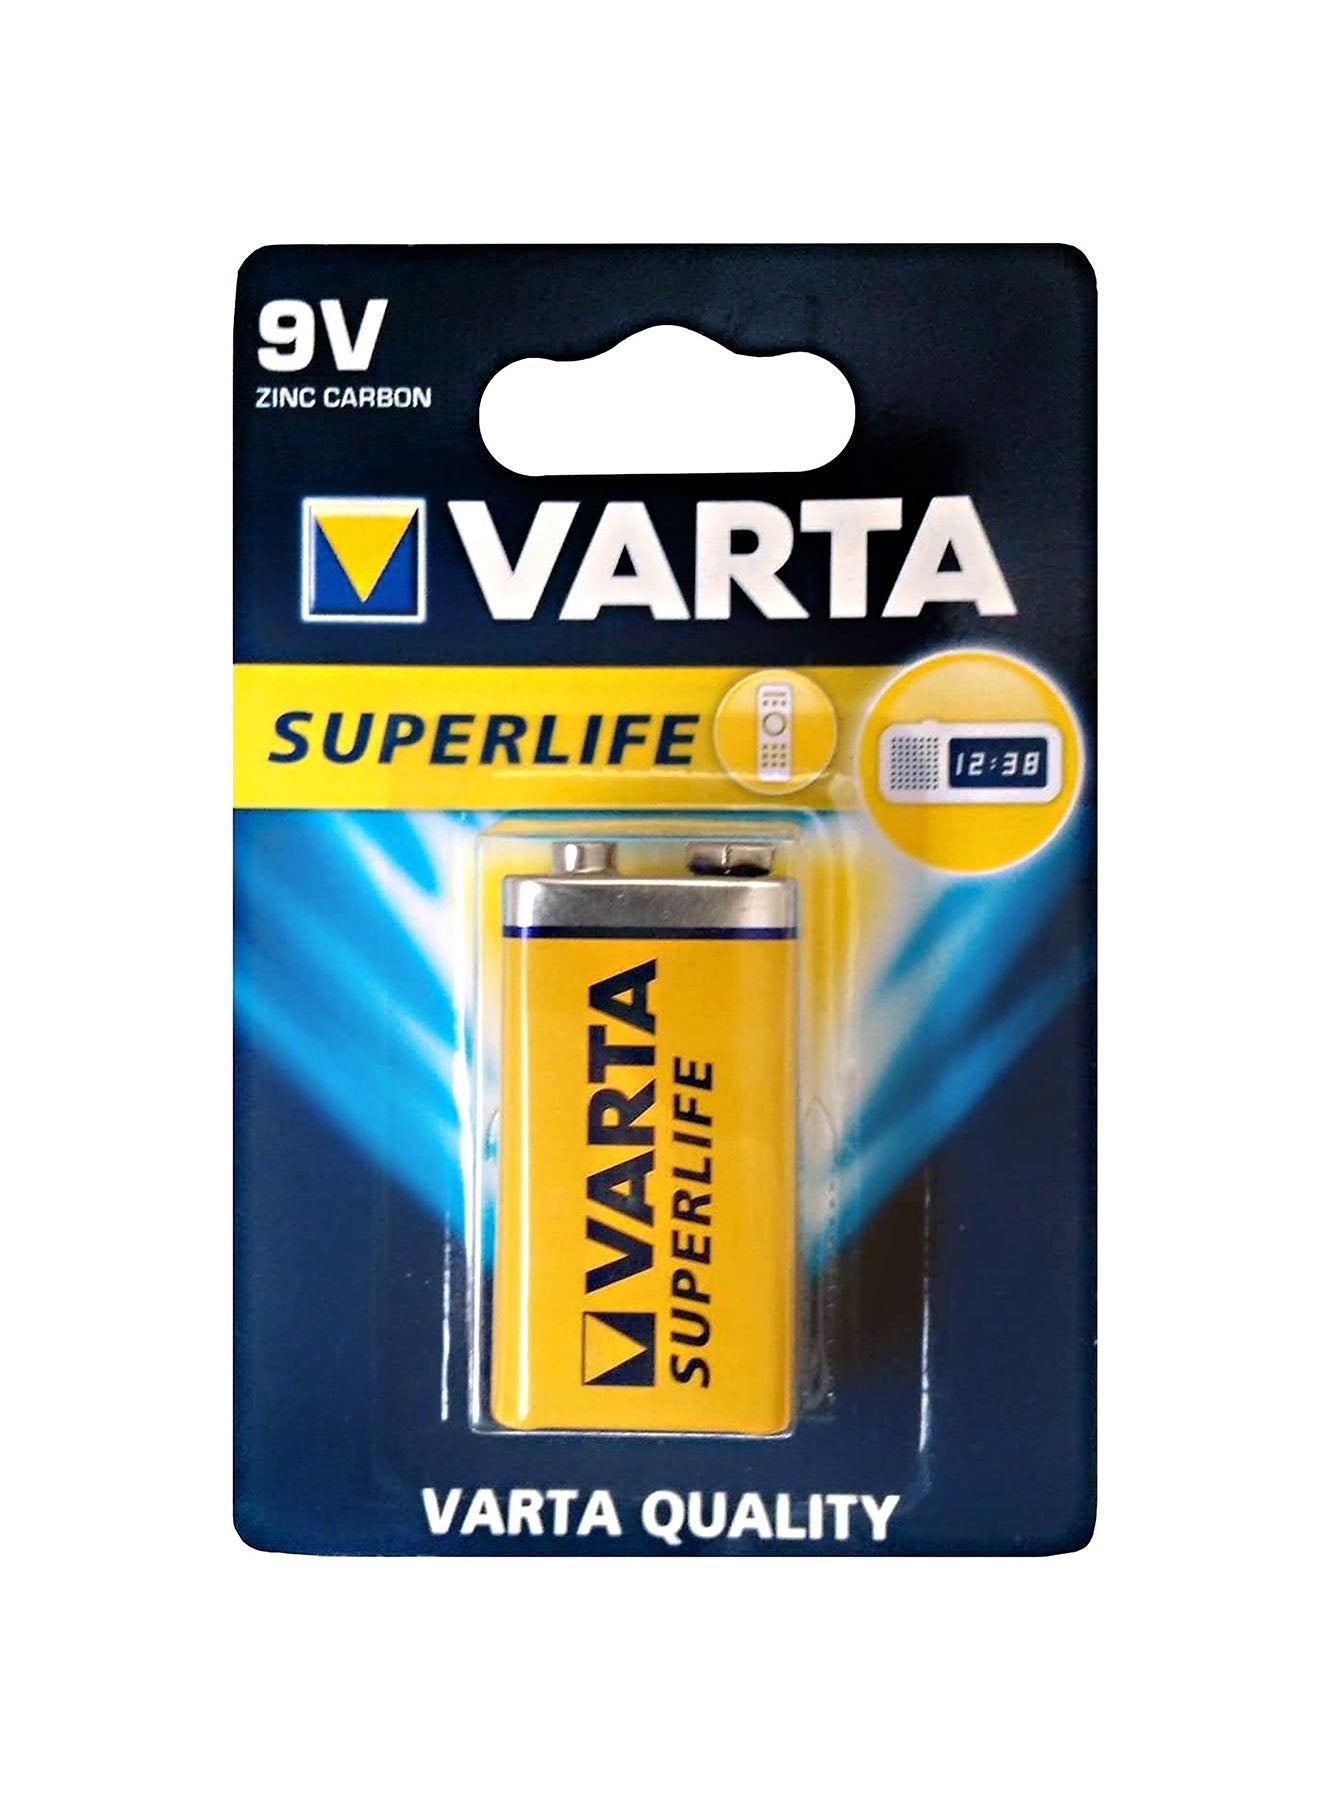 Varta Superlife 9 V Battery Value Pack of 3 